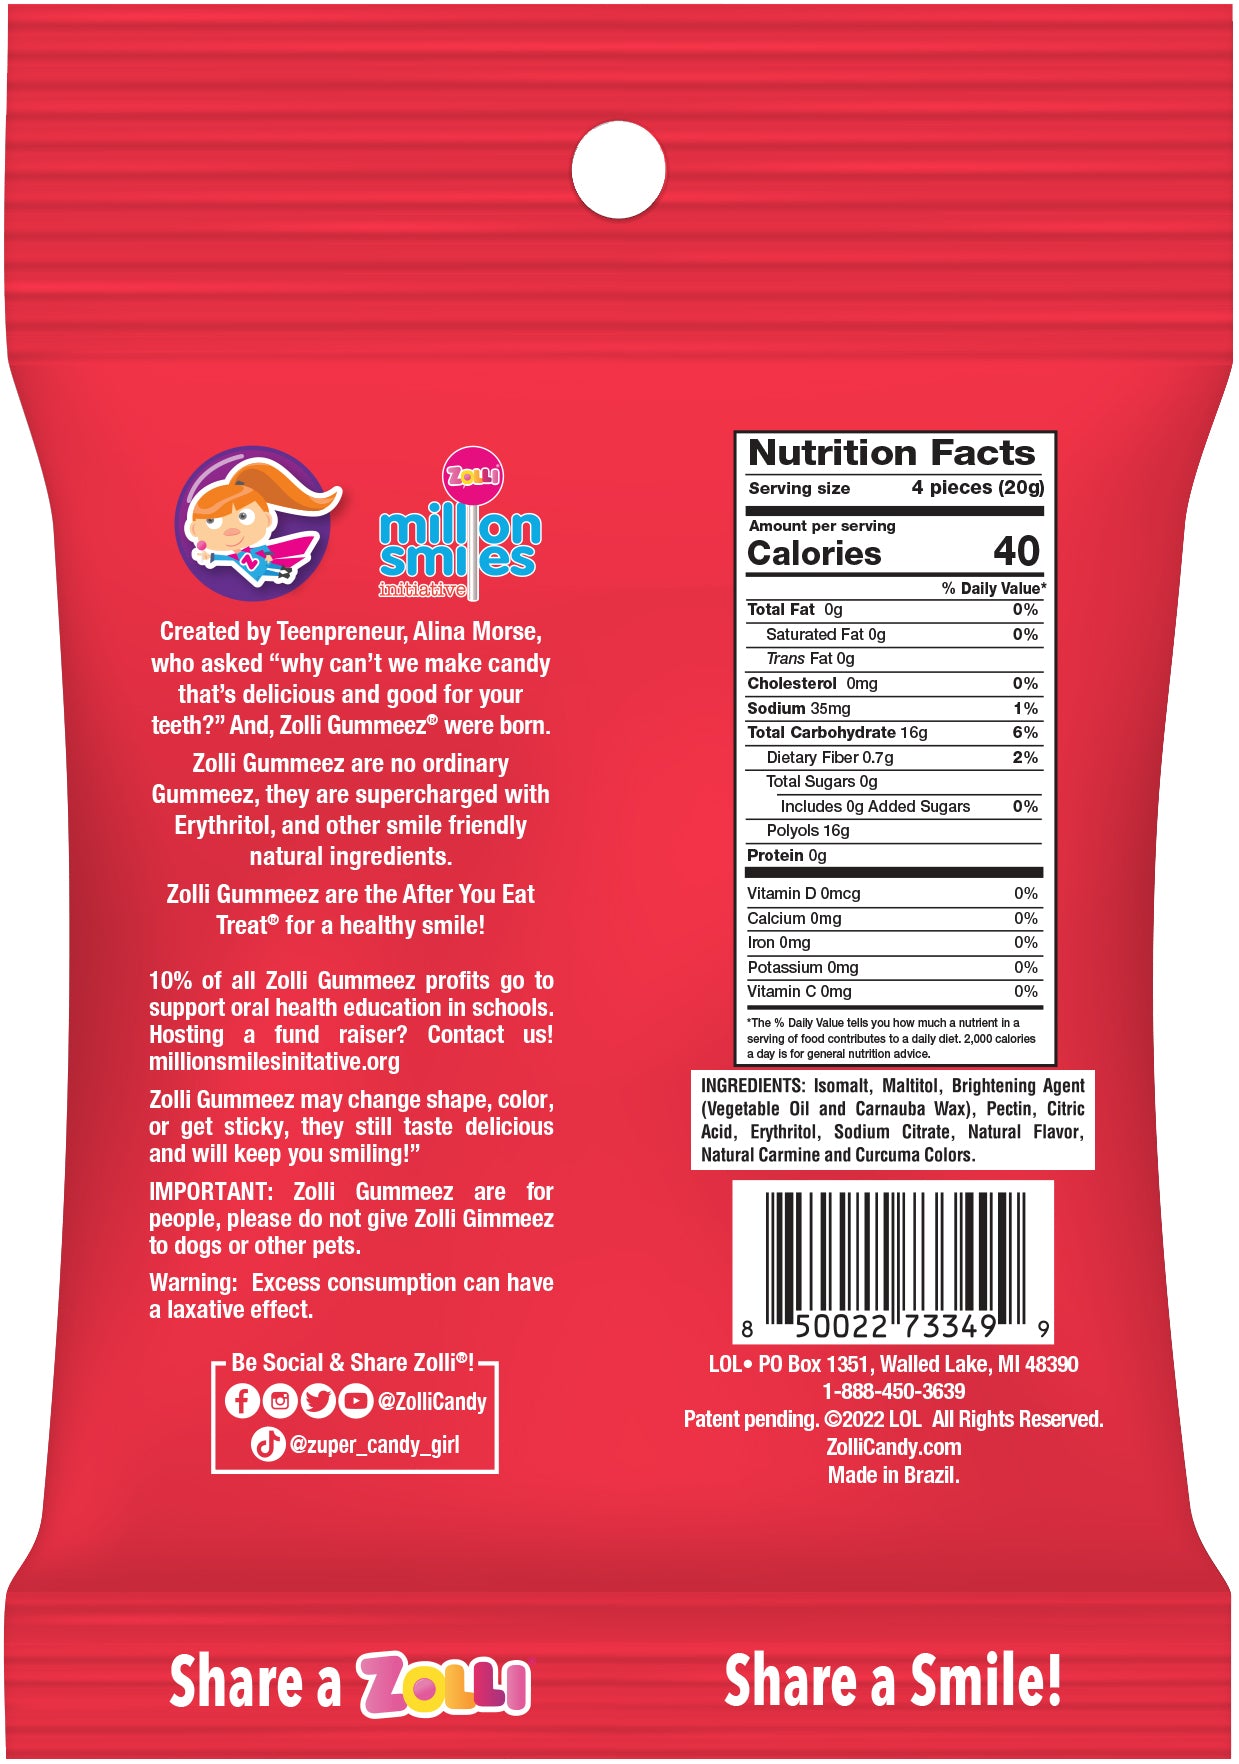 NEW! Zolli Gummeez 4 Flavor Bundle! SAVE $4 with Discount Code INTRO4 Gummy Bears